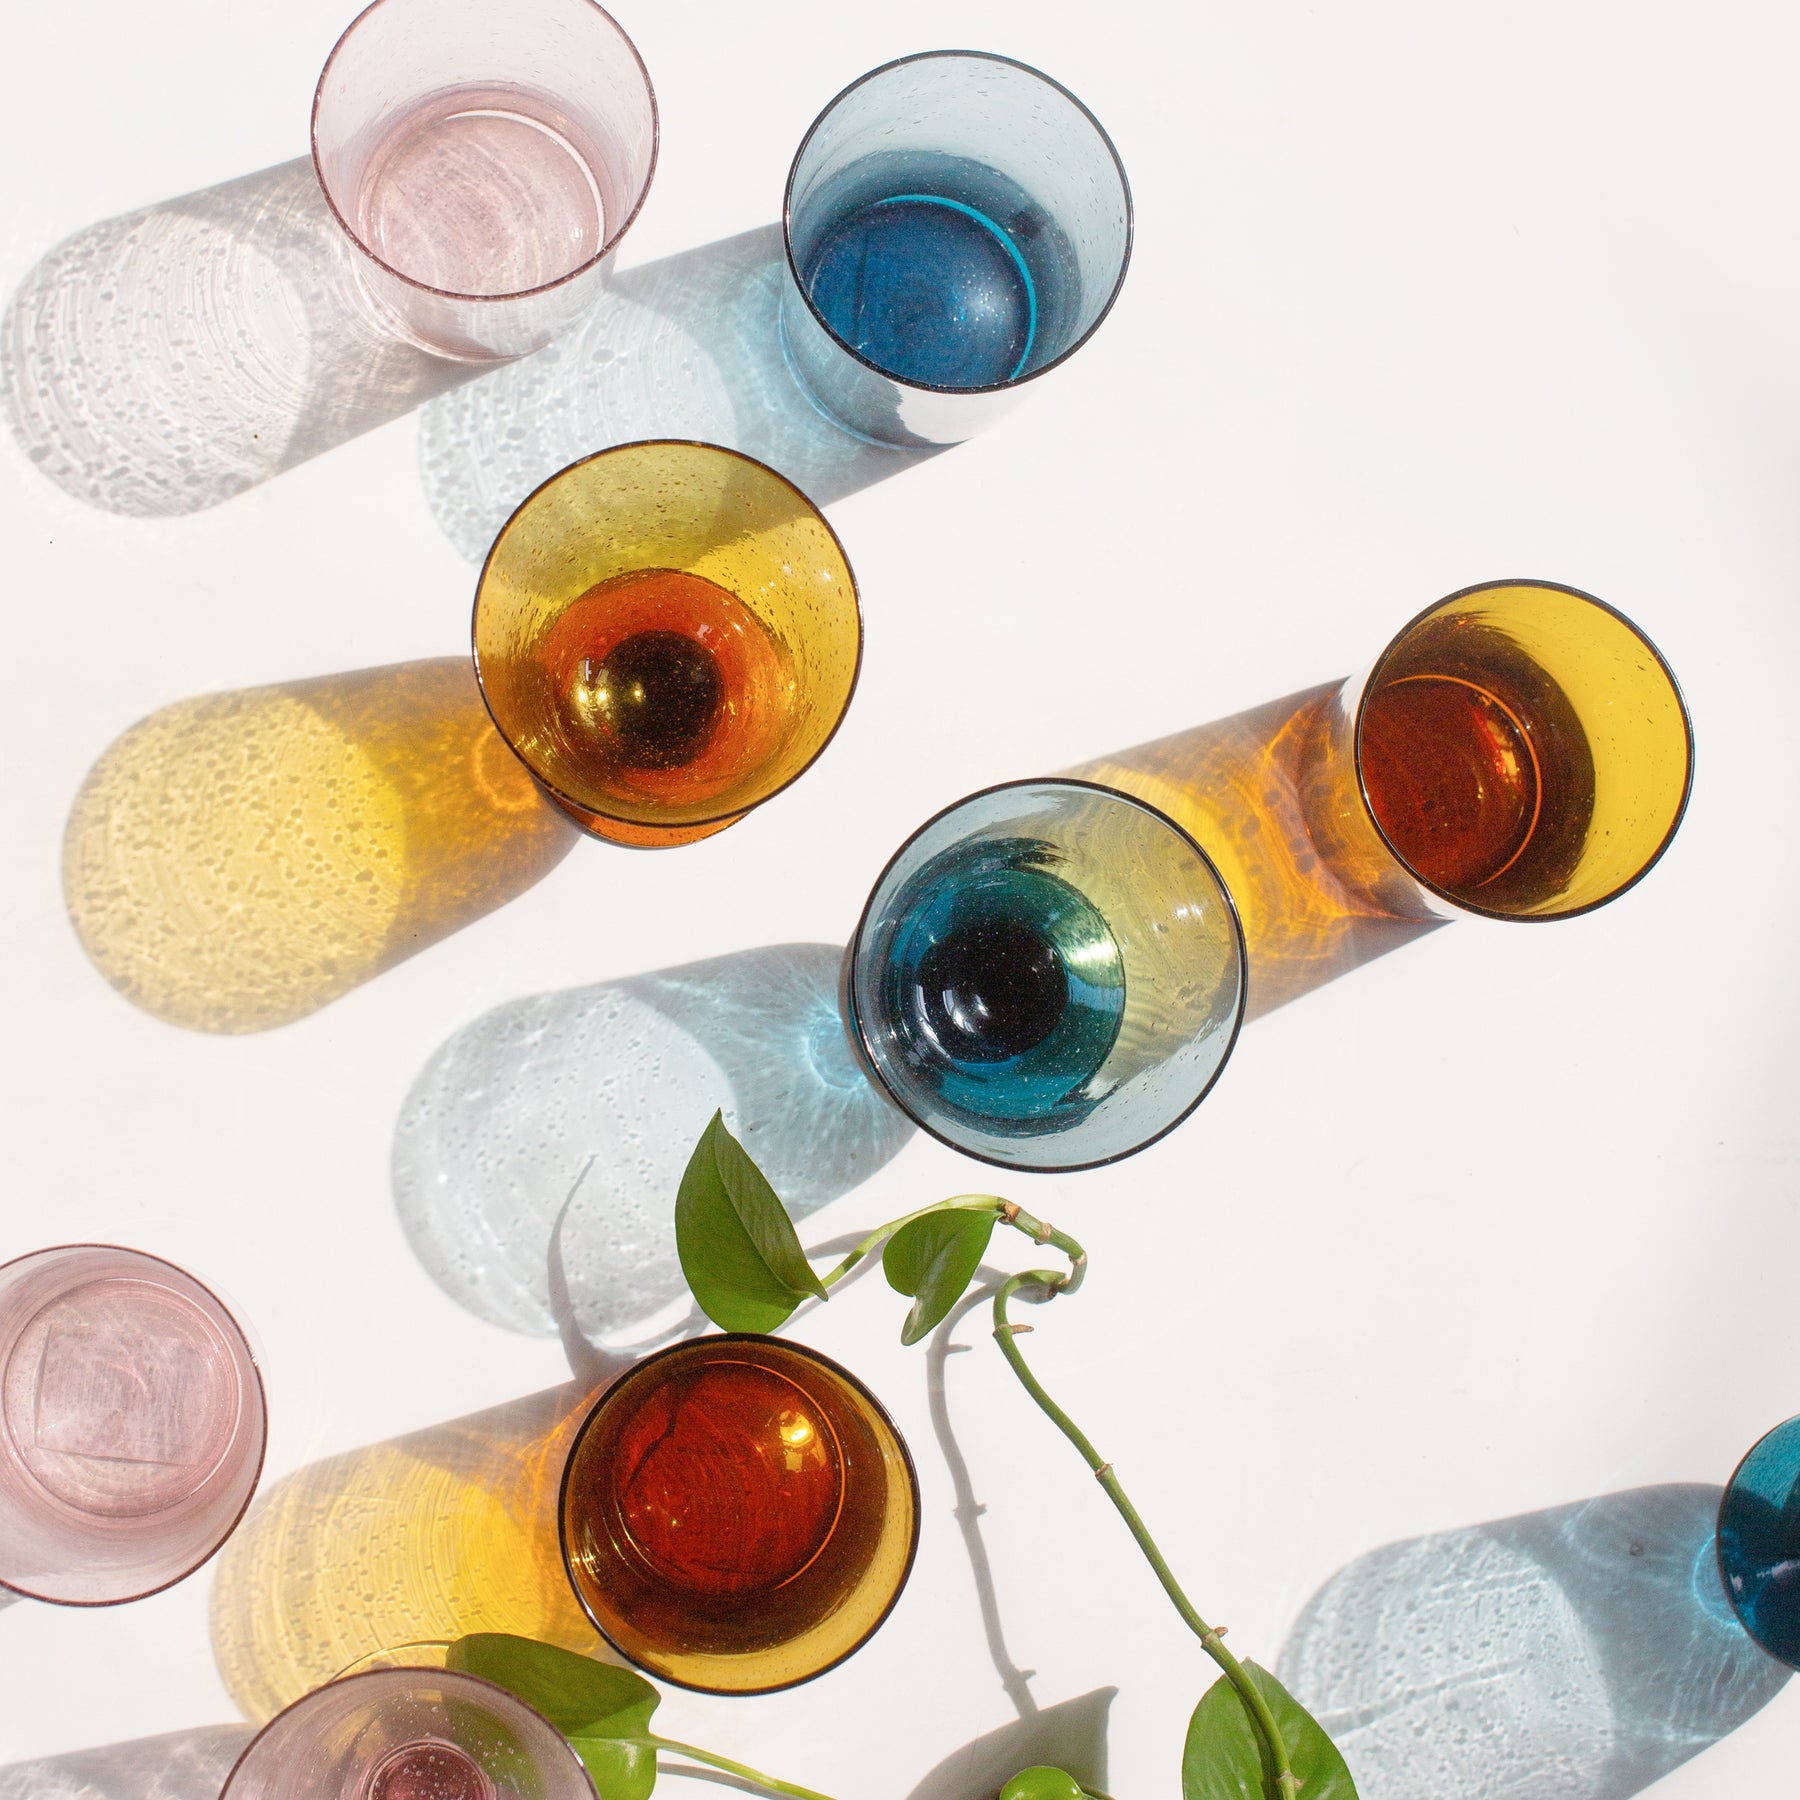 Handblown Mexican Short Stem Wine Glasses (Set of 4) – ILI Be Home